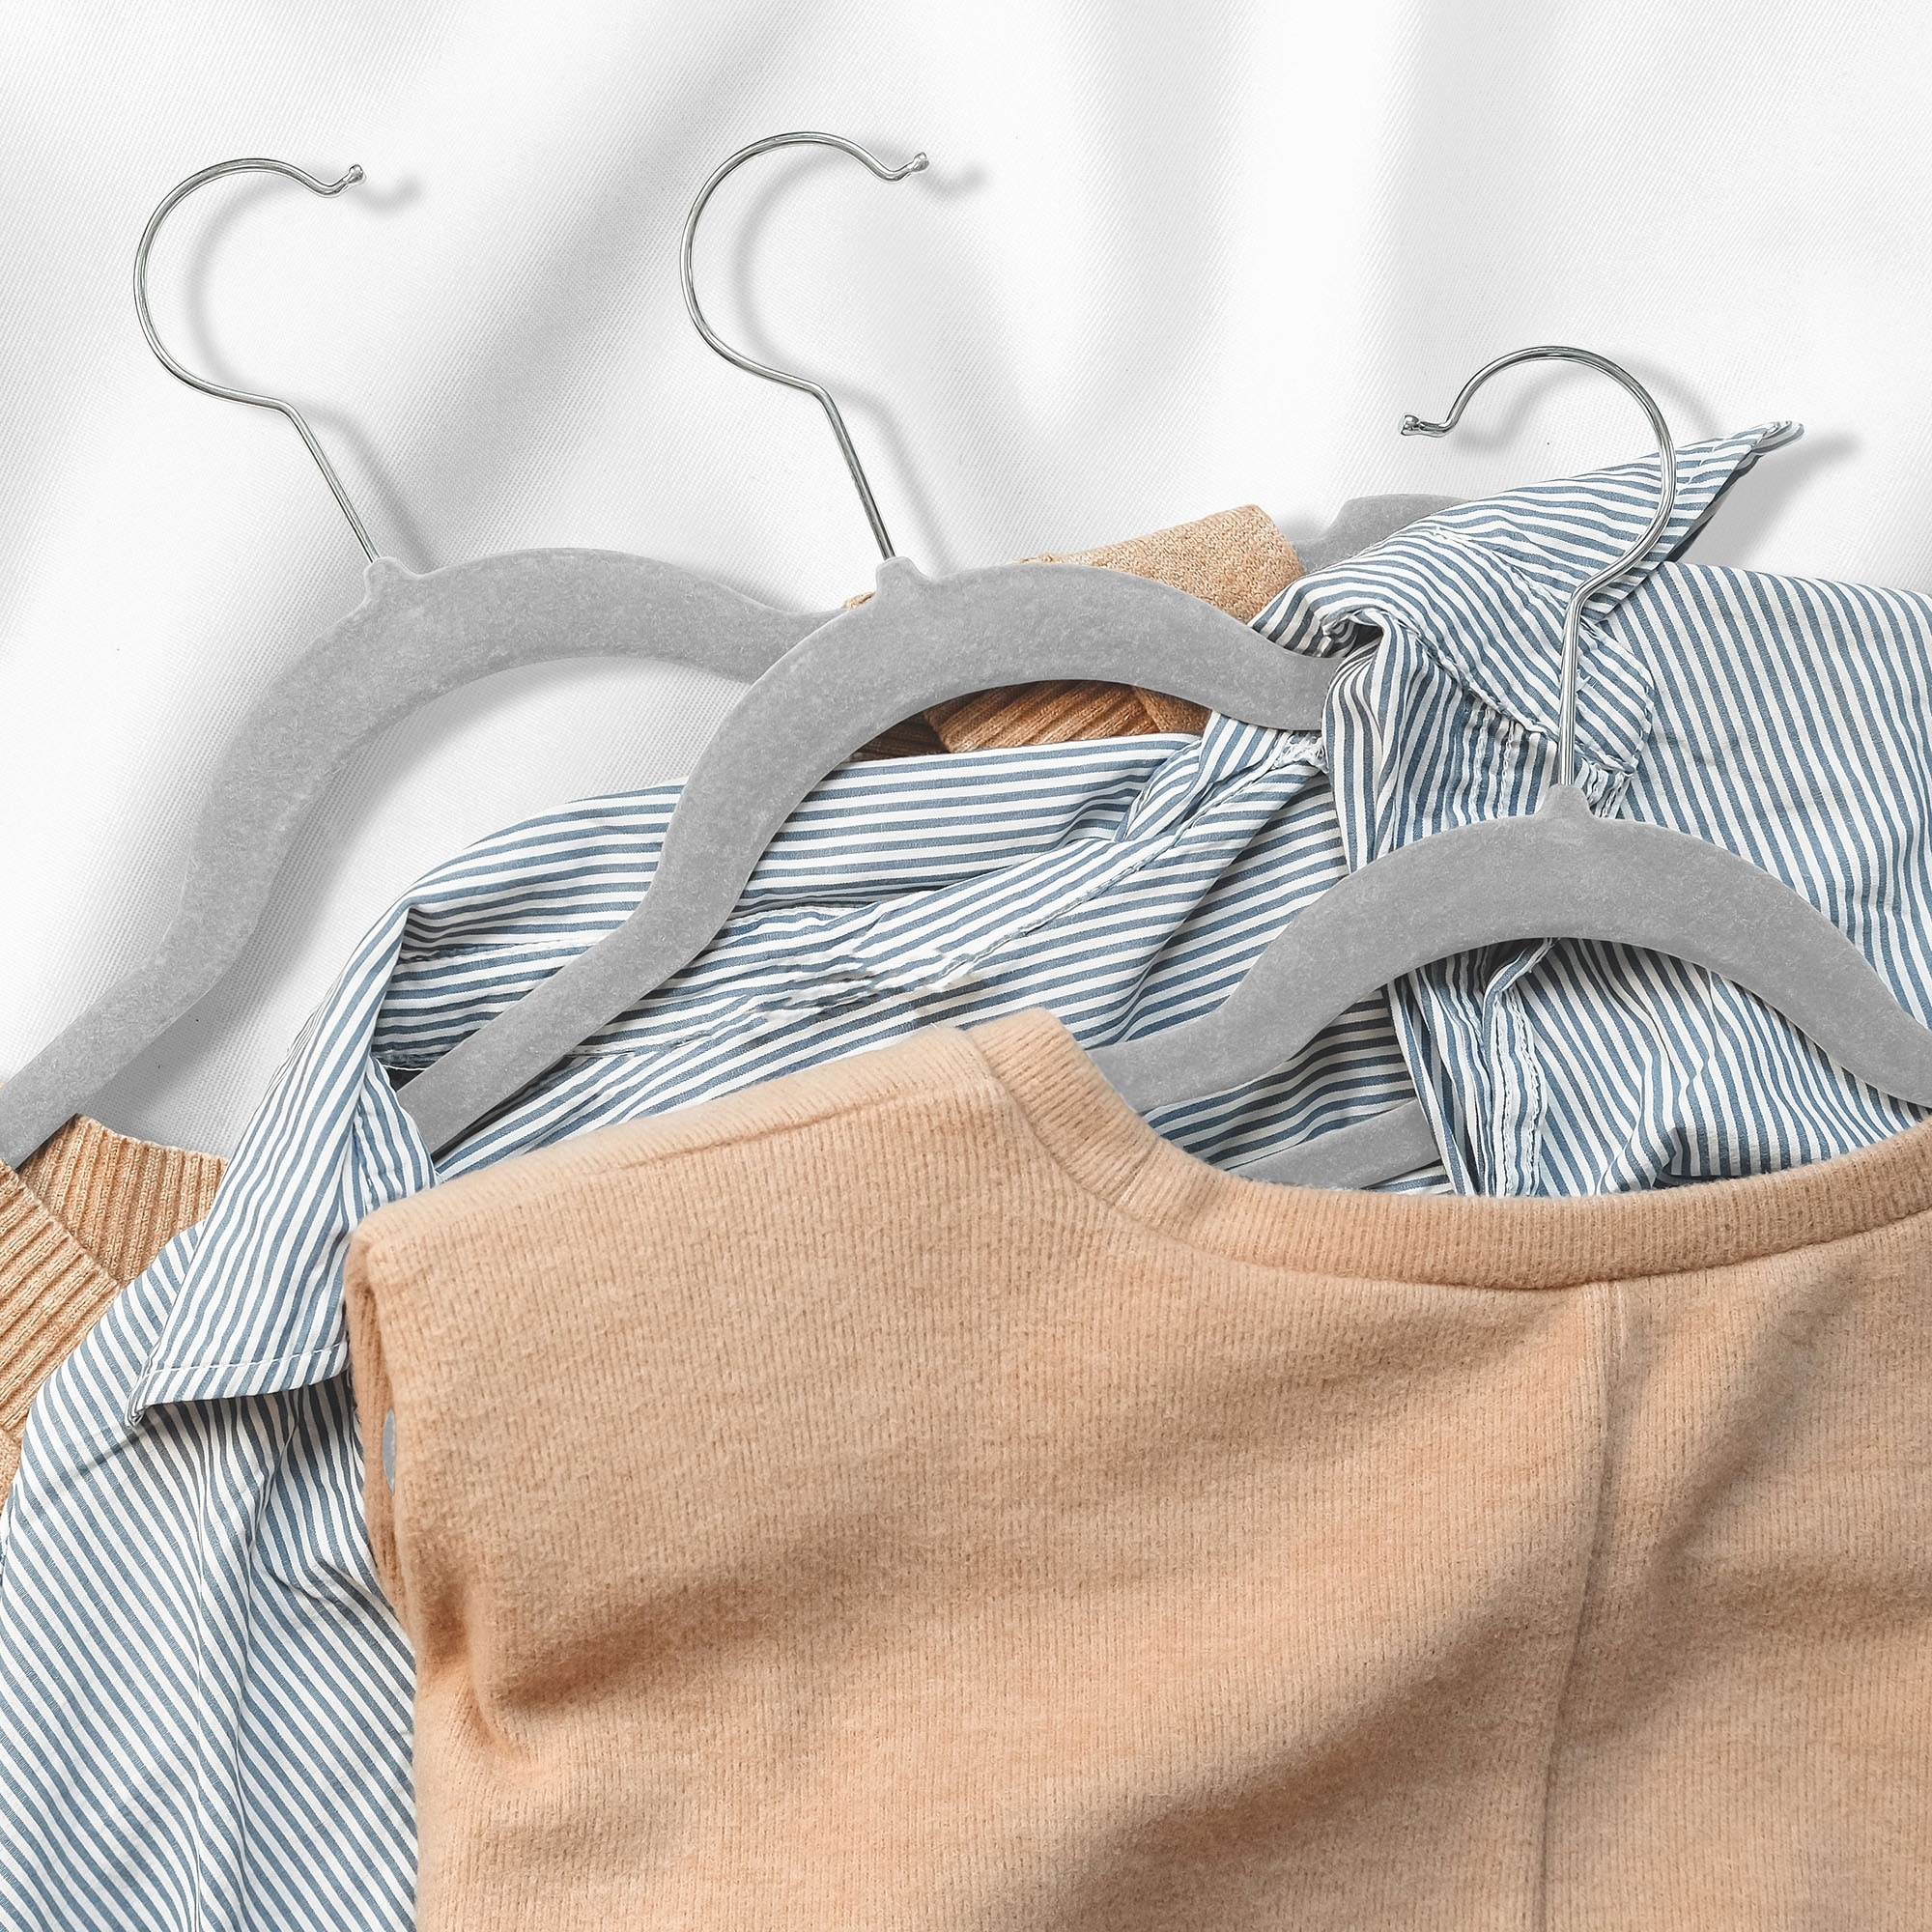 Ulimart Kids Hangers - 14 Inch 50 Pack - Kids Velvet Hangers Ideal for  Everyday Standard Use,Baby Hangers for Closet,Durable Infant/Toddler  Hangers